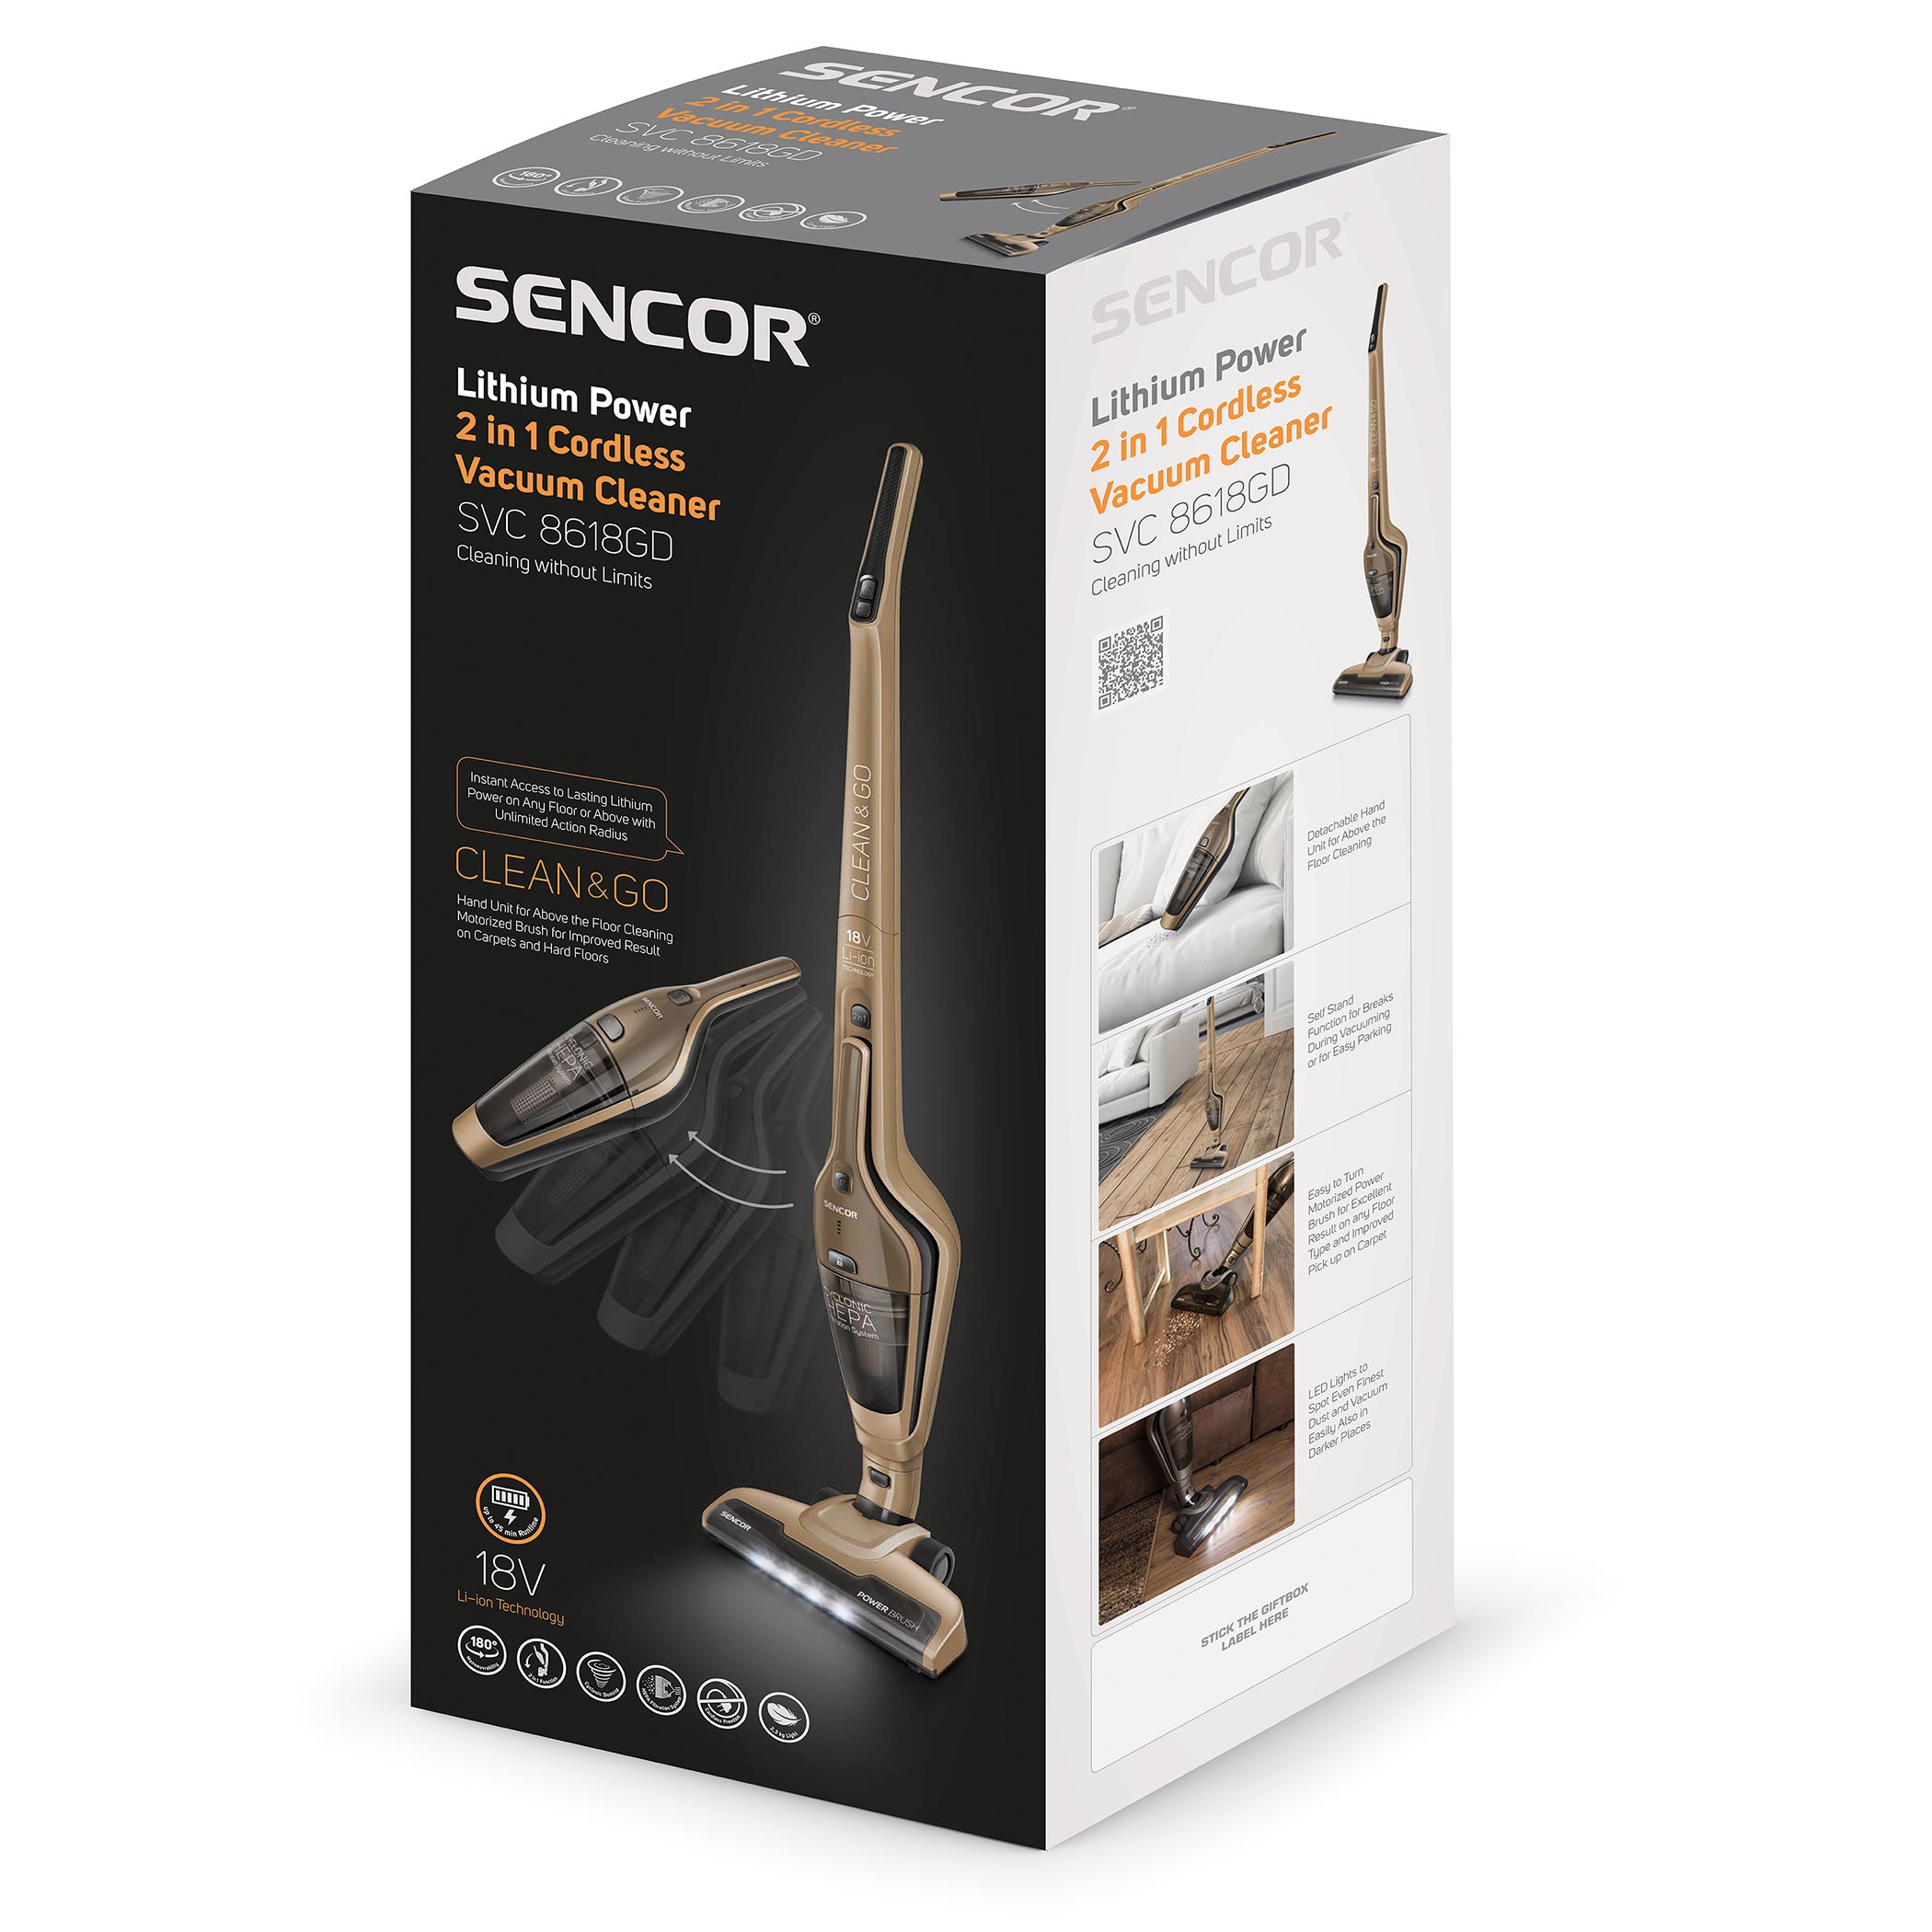 Sencor Cordless Vacuum Cleaner 2in1 SVC 8618GD